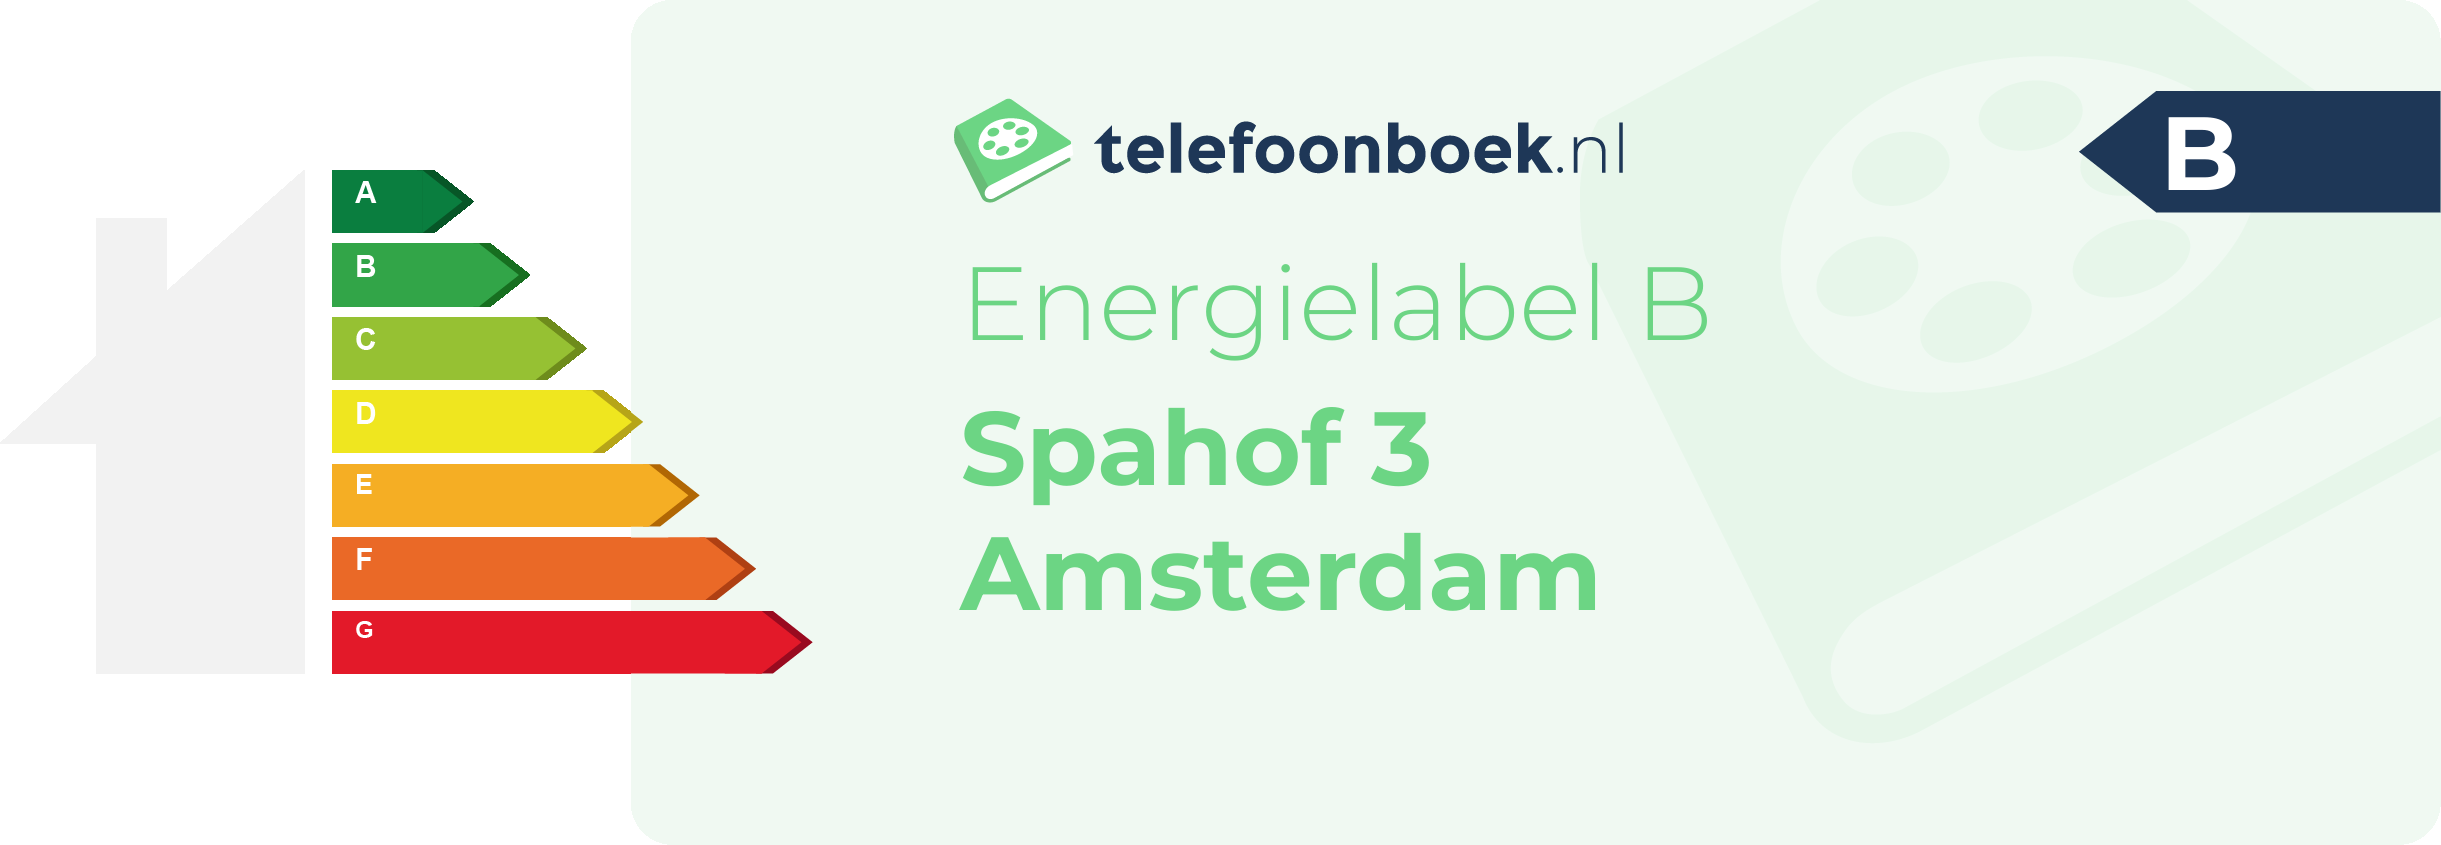 Energielabel Spahof 3 Amsterdam